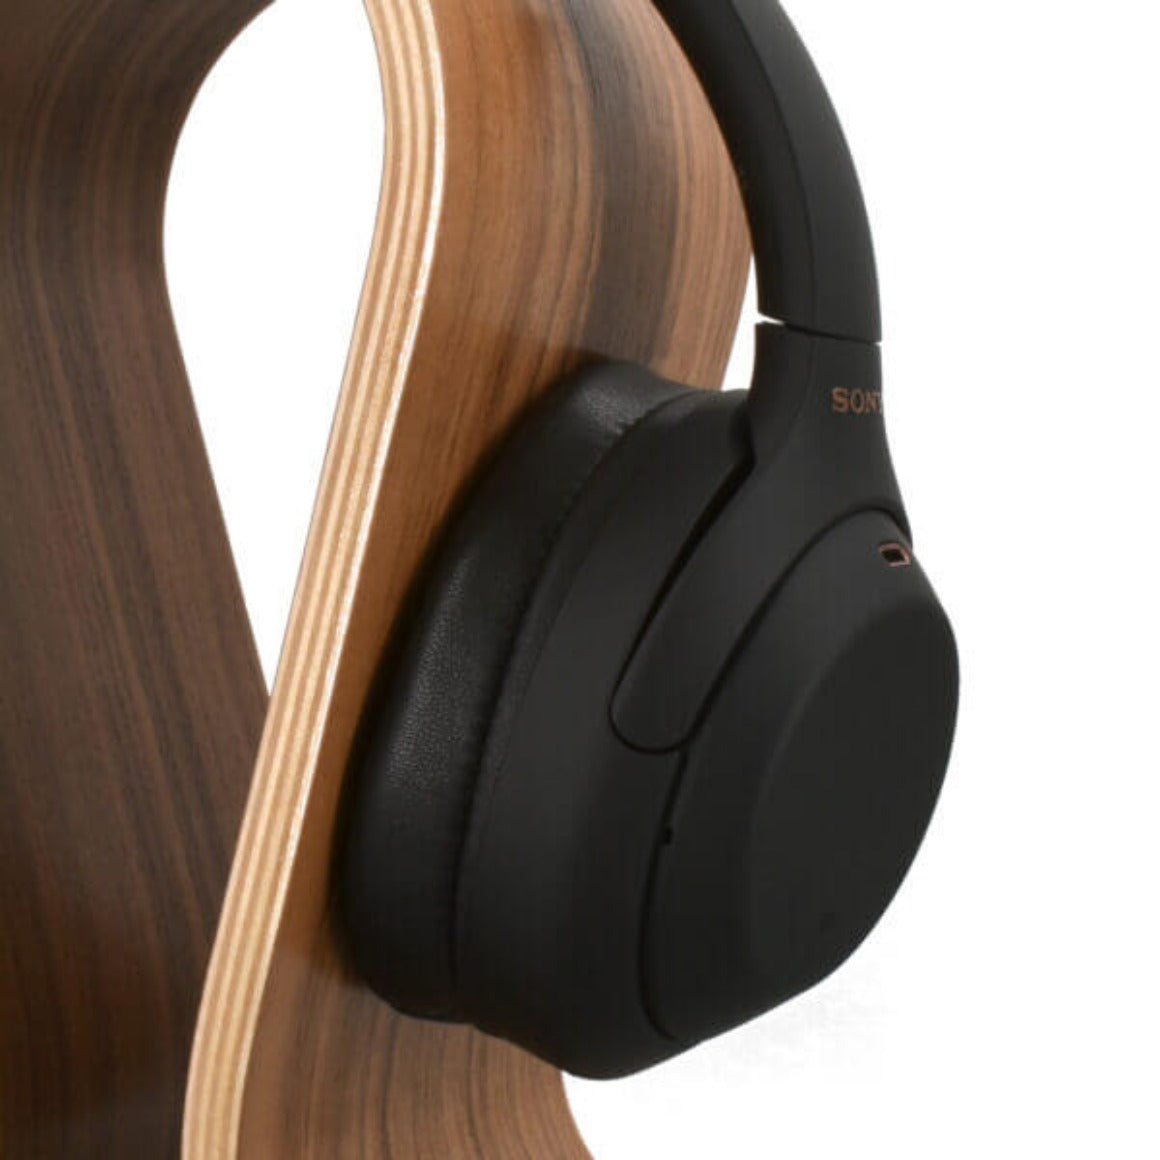 Dekoni Audio Choice Leather Earpads for Sony WH-1000XM4 Headphones Online